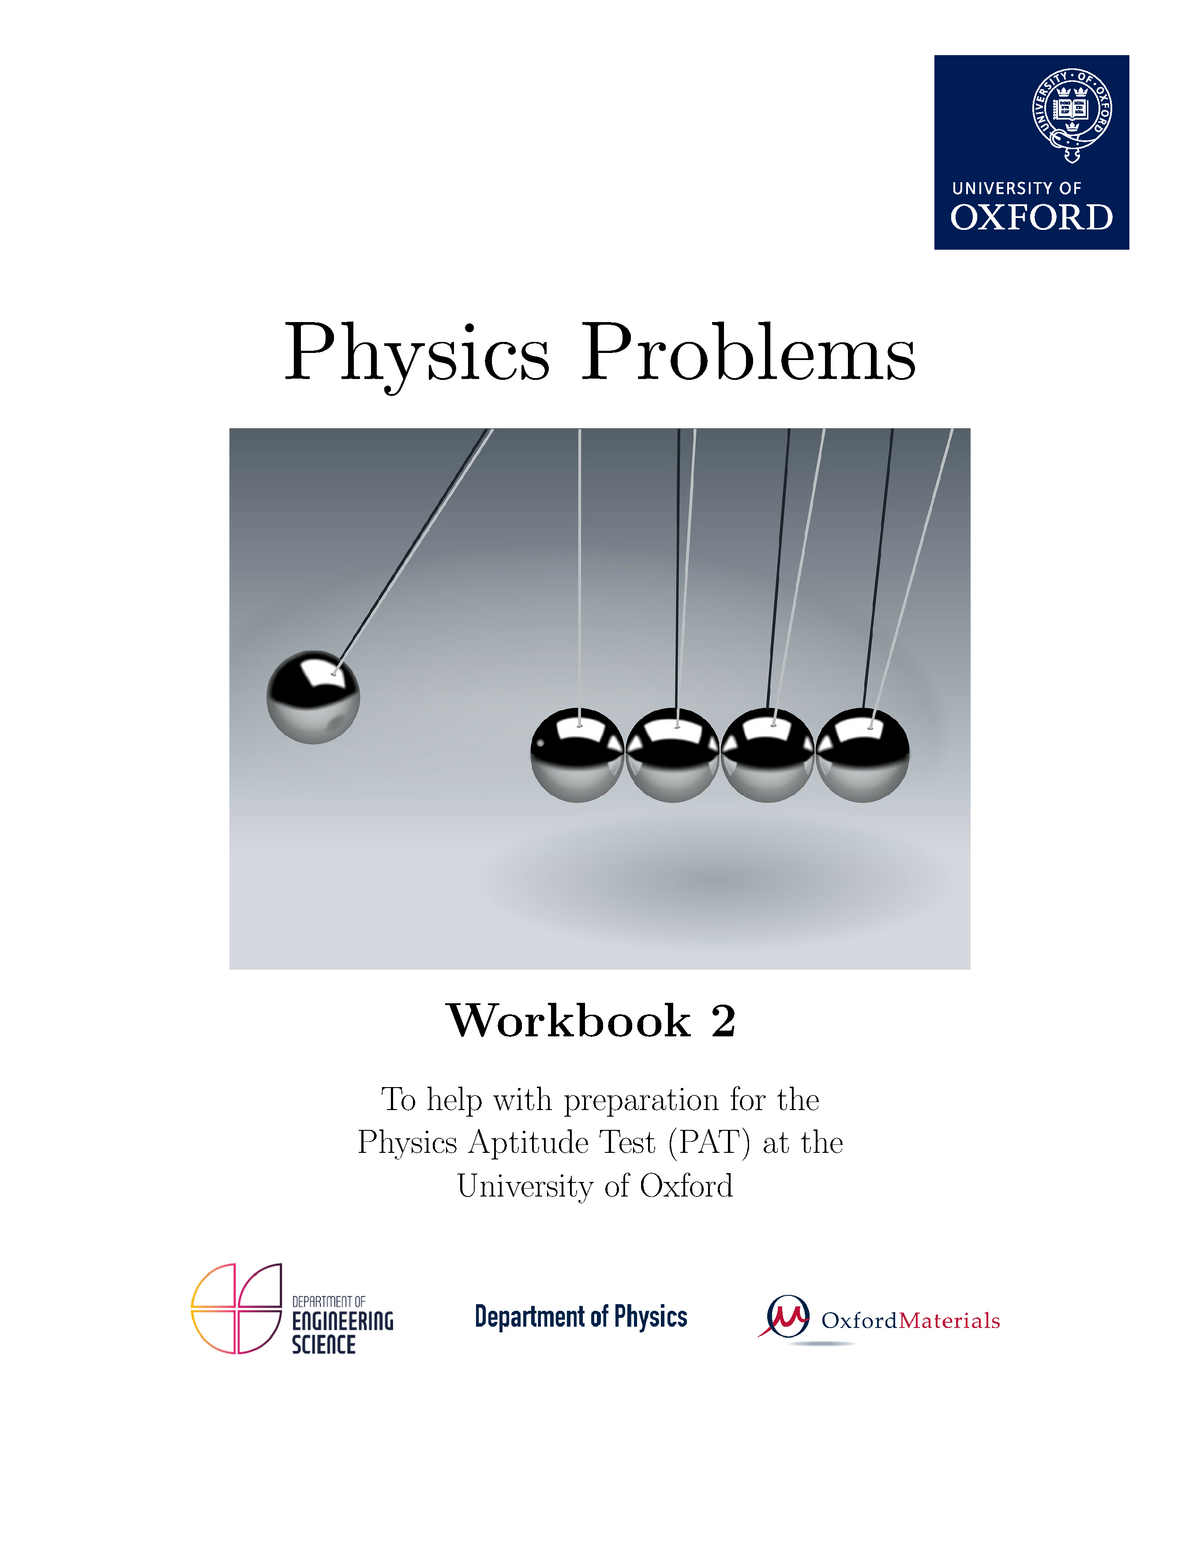 how-to-prepare-for-oxford-physics-aptitude-test-pat-filo-blog